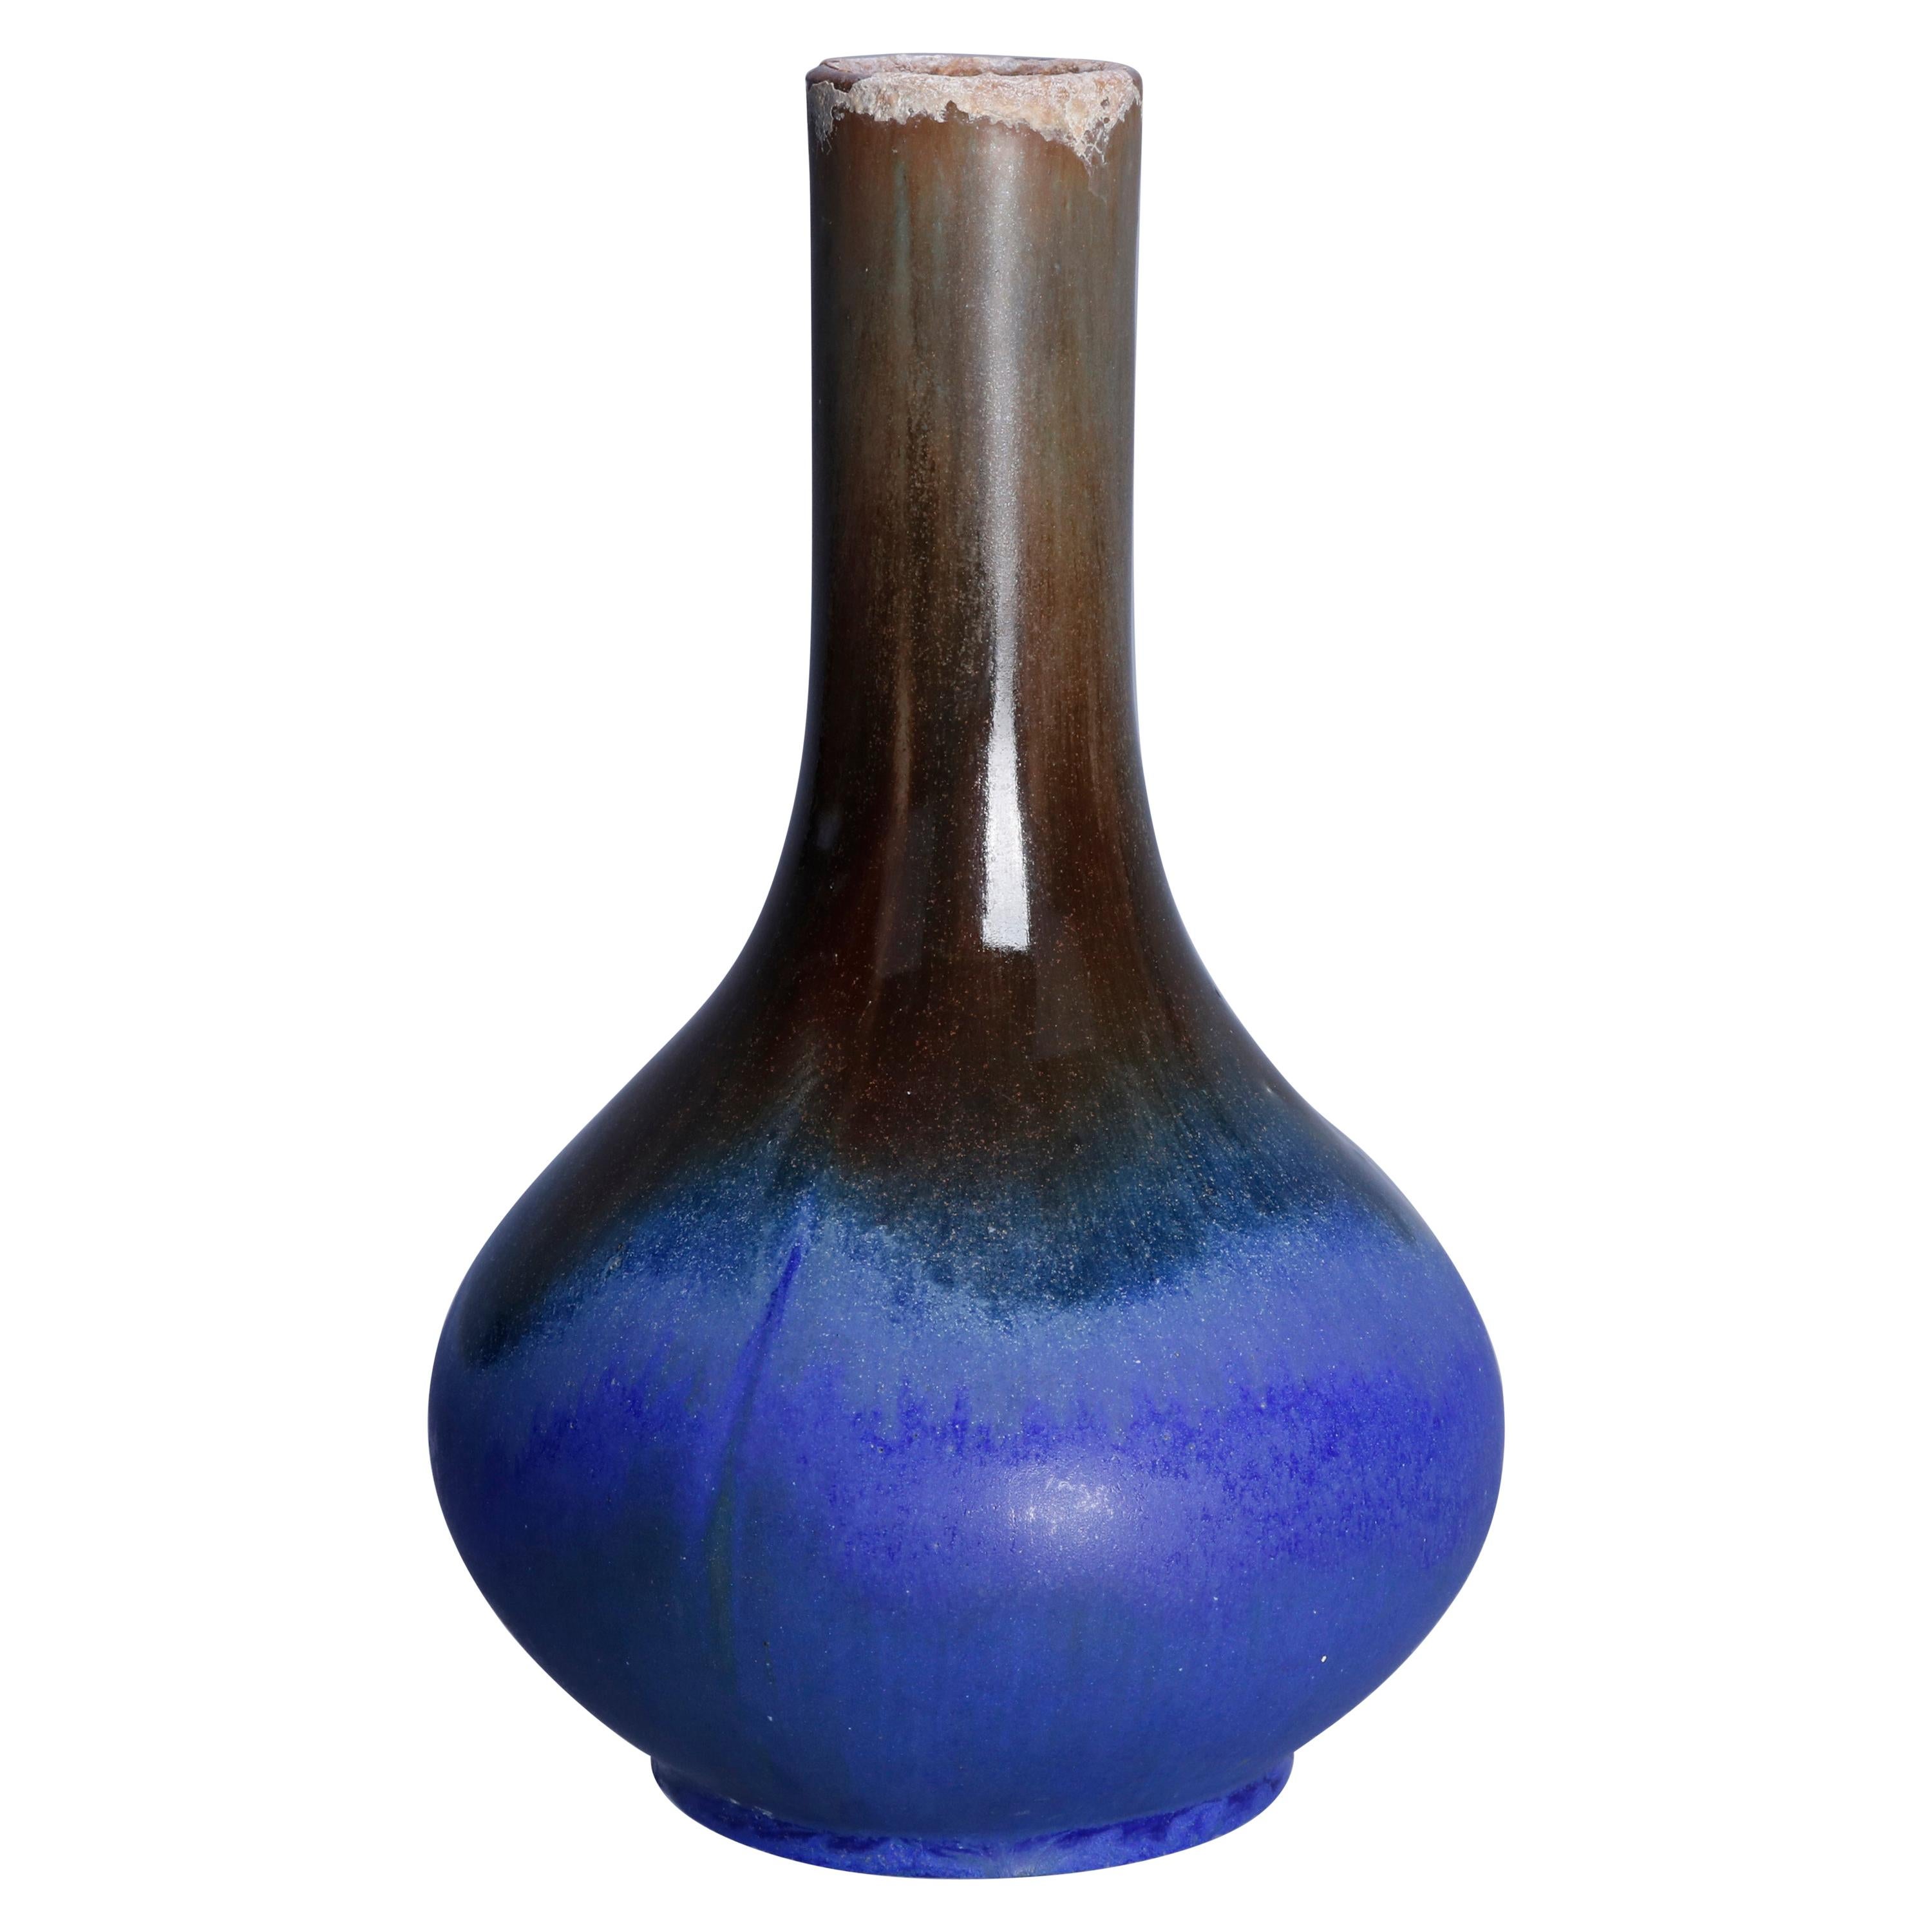 Antique Arts & Crafts Art Pottery Drip Glaze Bottle Vase by Fulper, circa 1920